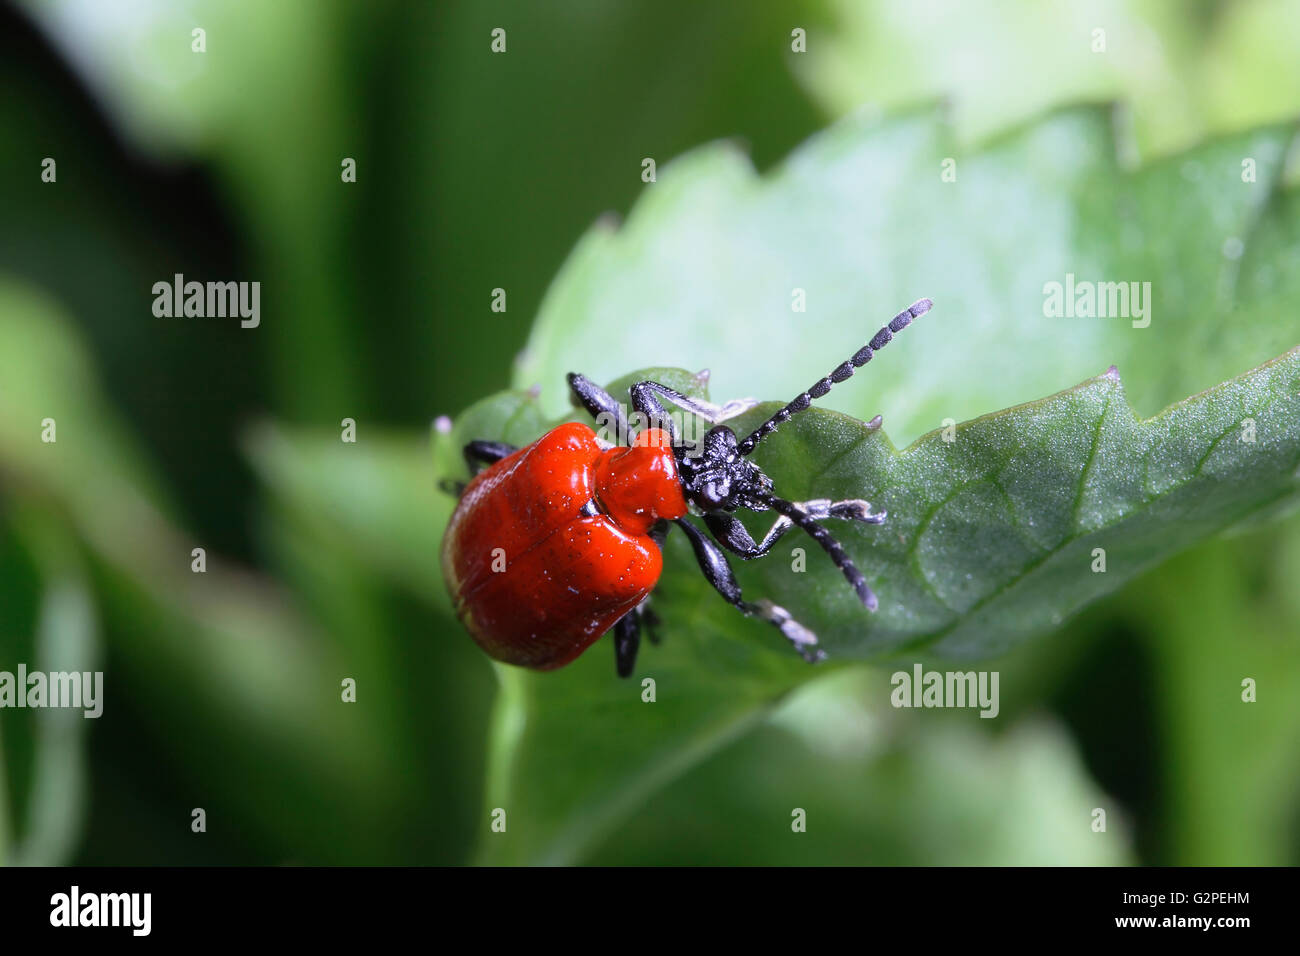 Insekten, Käfer, Scarlet Lily Käfer, Käfer Lilloceris Lilii, rote farbige Insekt auf dunkelgrünem Laub. Stockfoto